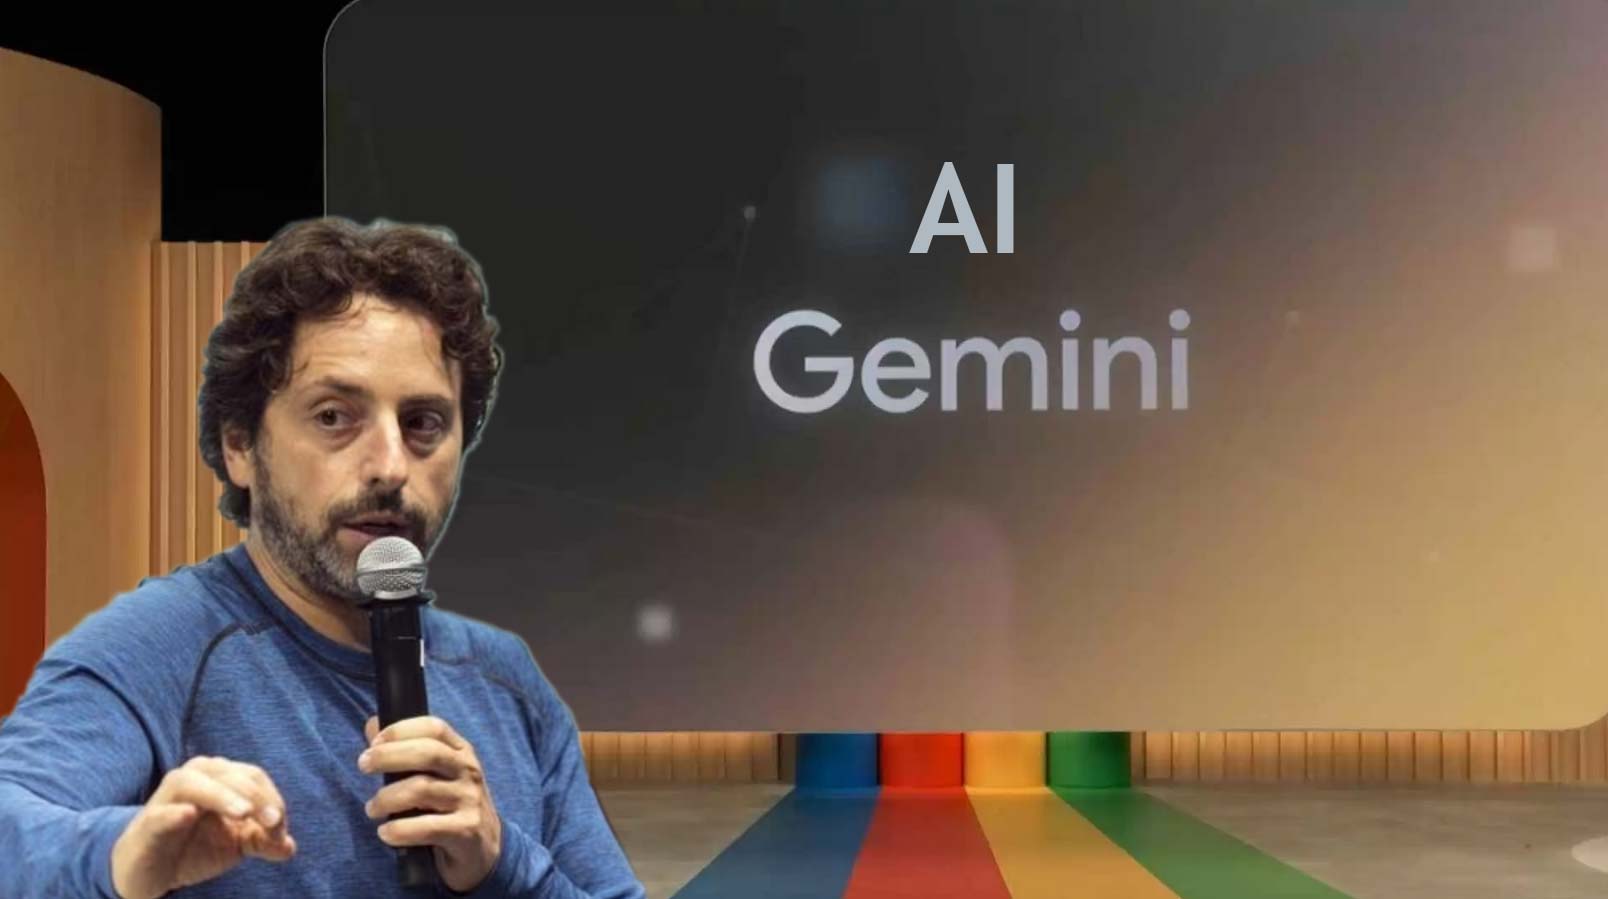 Sergey Brin has returned to Google to work on the secretive AI Project Gemini